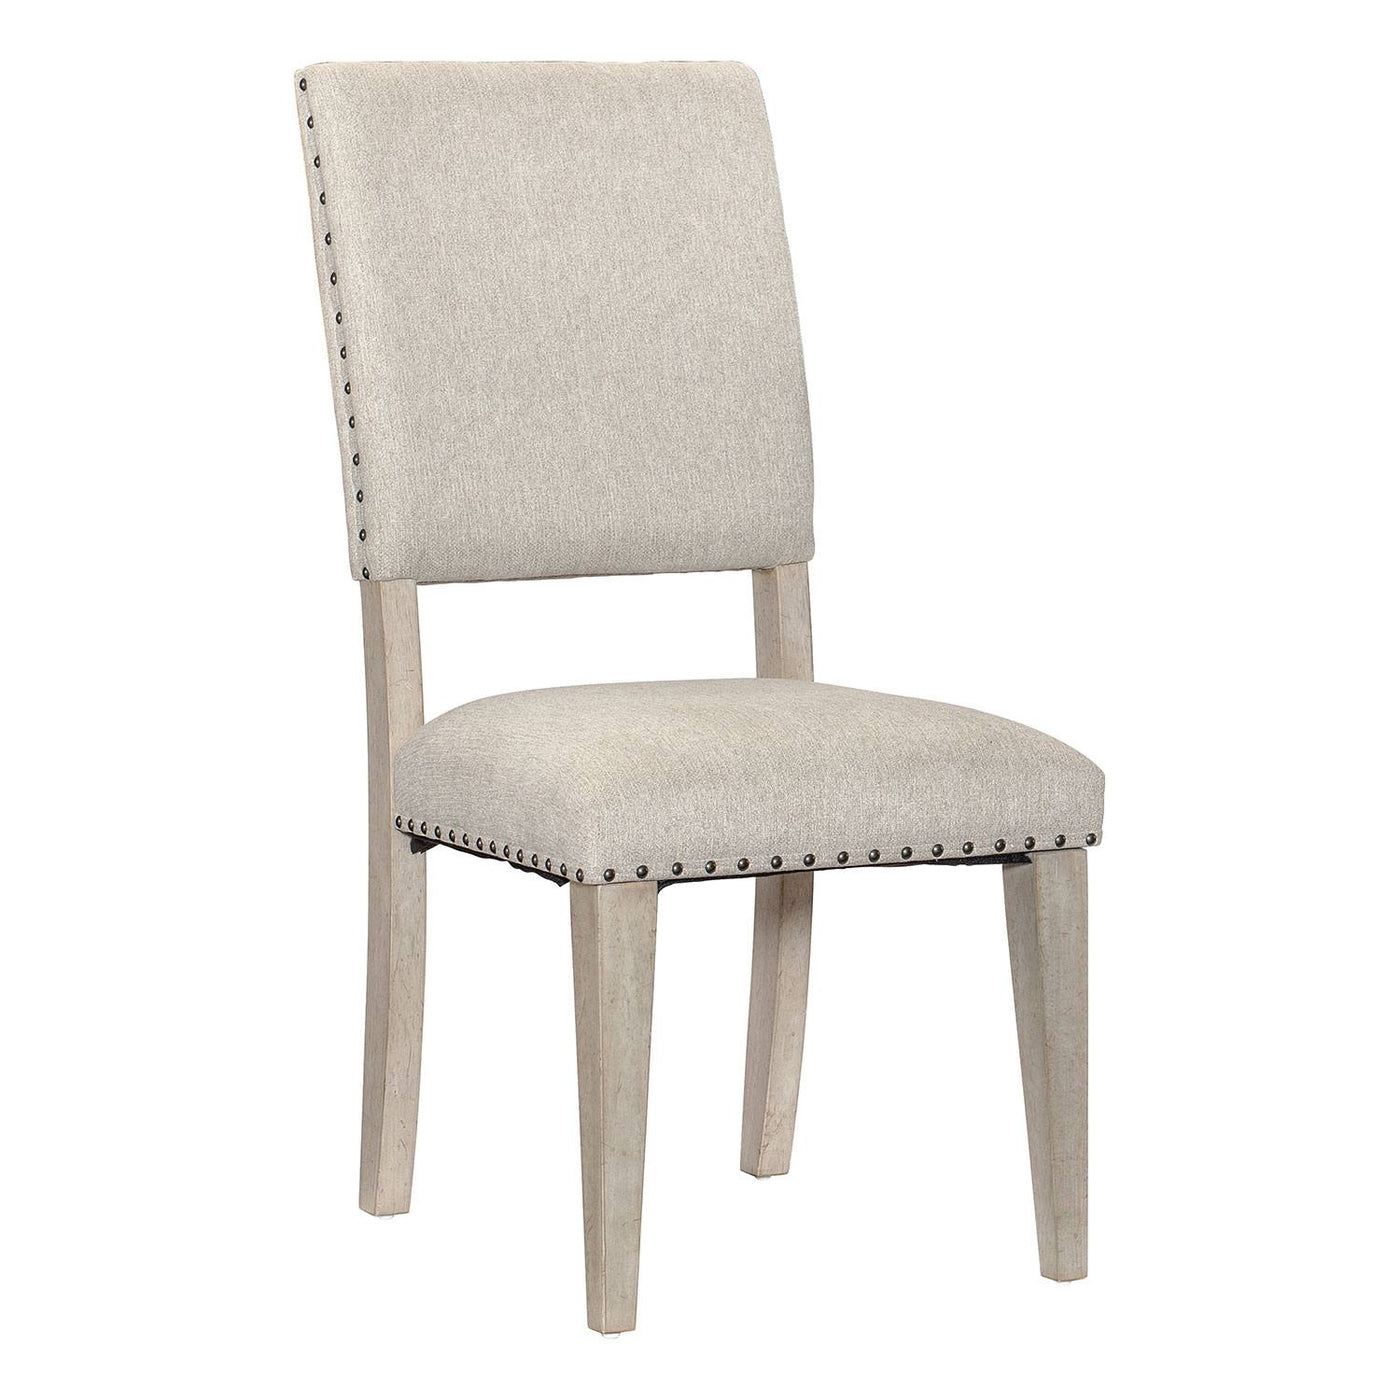 Fallon Dining Chair - Grey, Beige